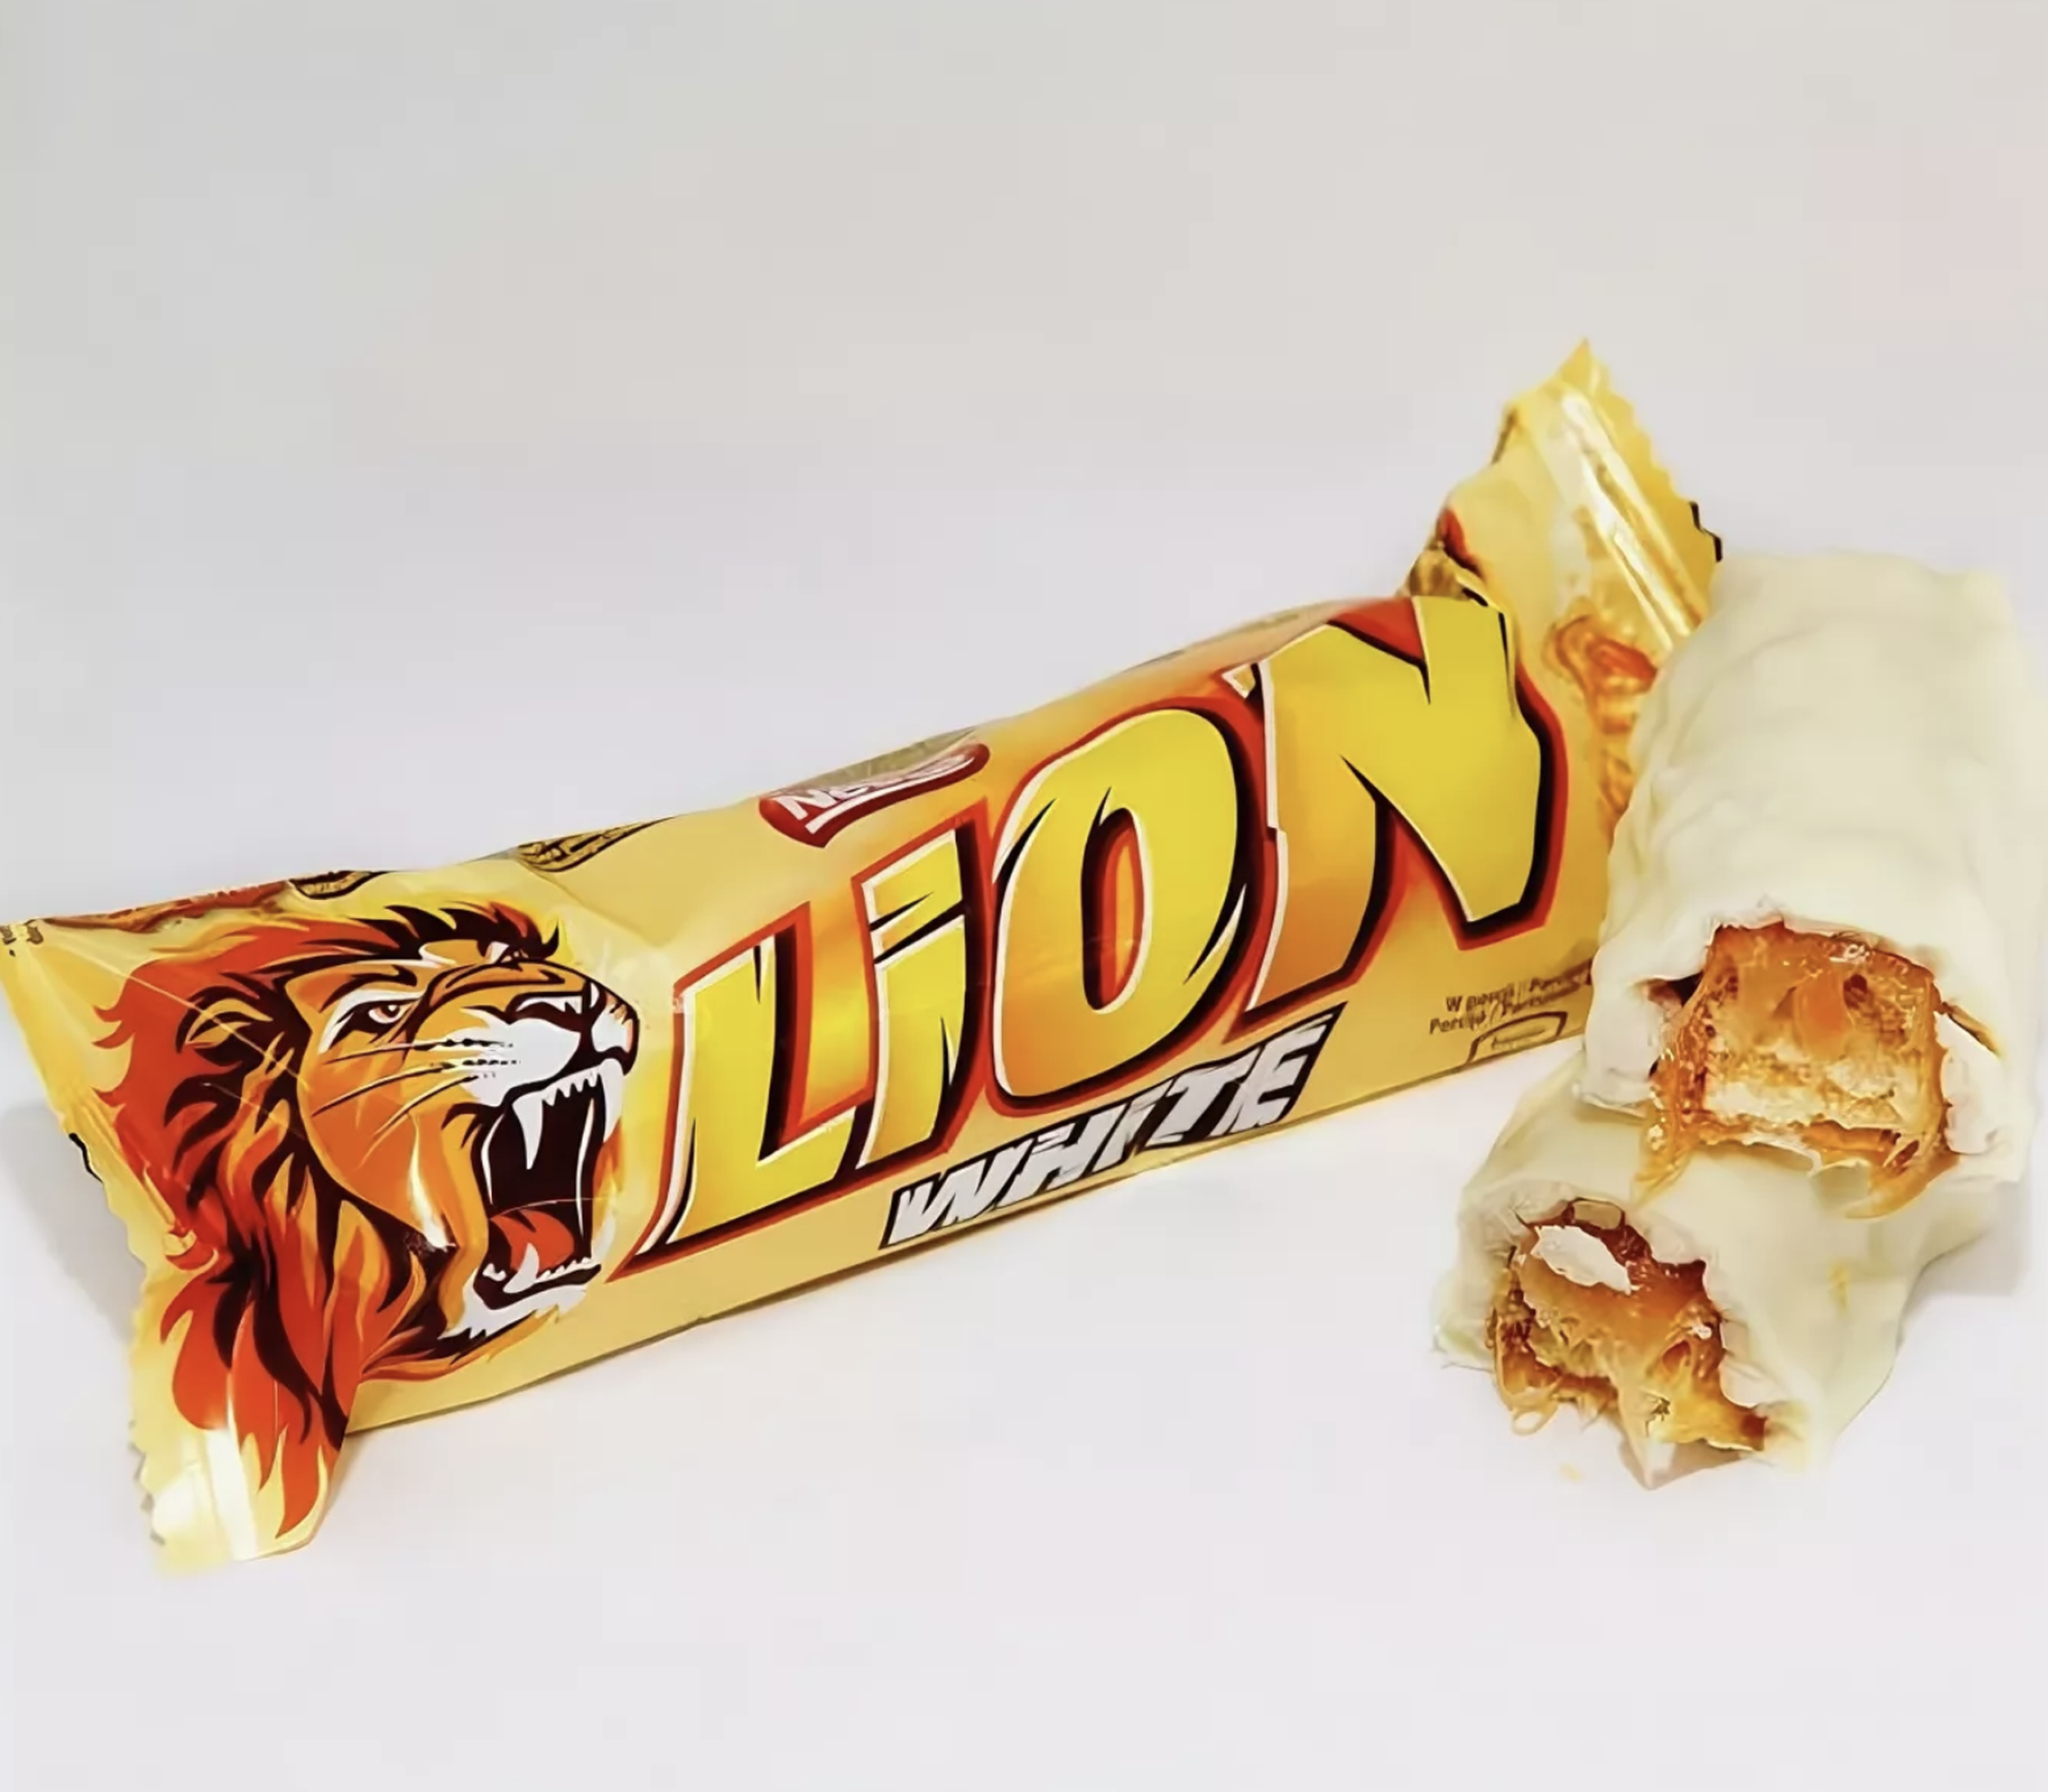 Lion White батончик 42гр. Шоколадный батончик Lion Standart Caramel 42г. Lion (Nestle) White ШОК. Батончик 42г 40шт. Лайон / Lion шоколадный батончик.